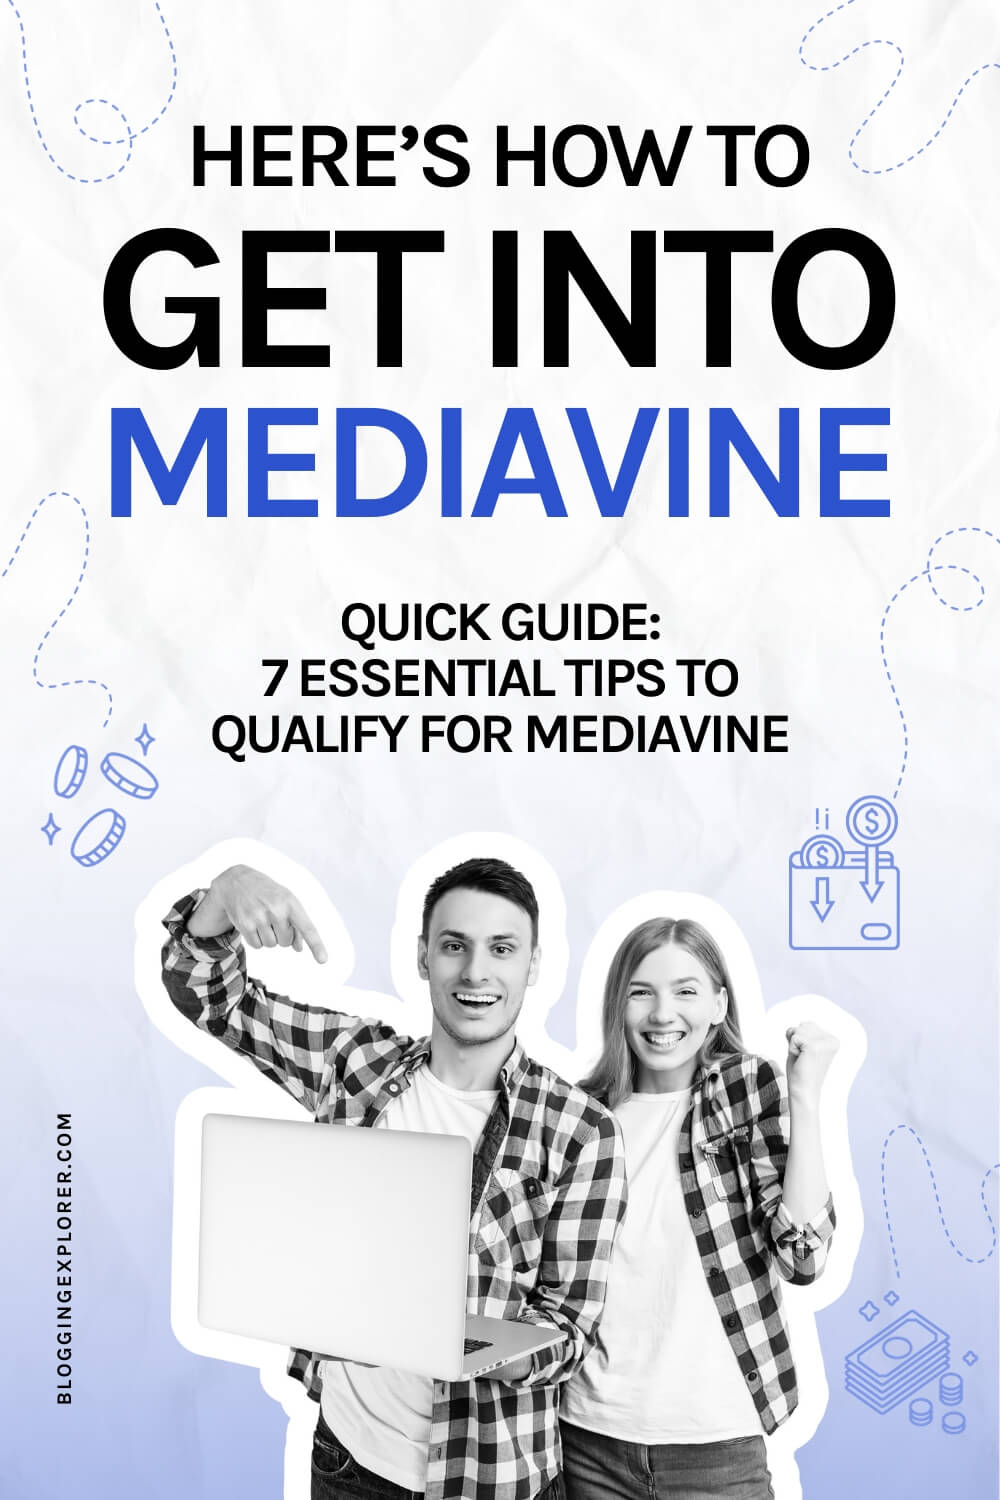 How to get into Mediavine – Quick guide to qualify for Mediavine